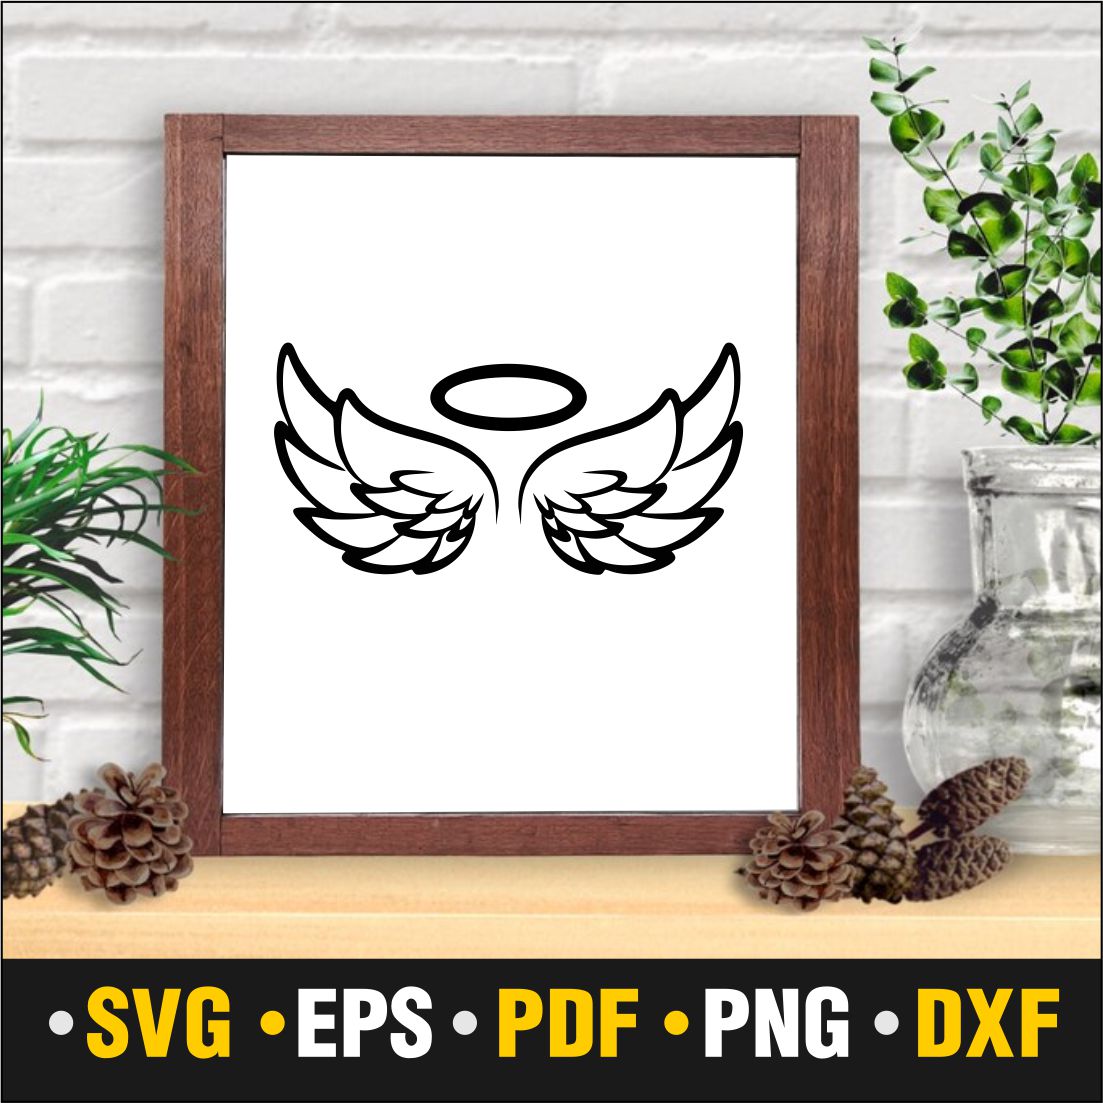 Angel wings poster design.